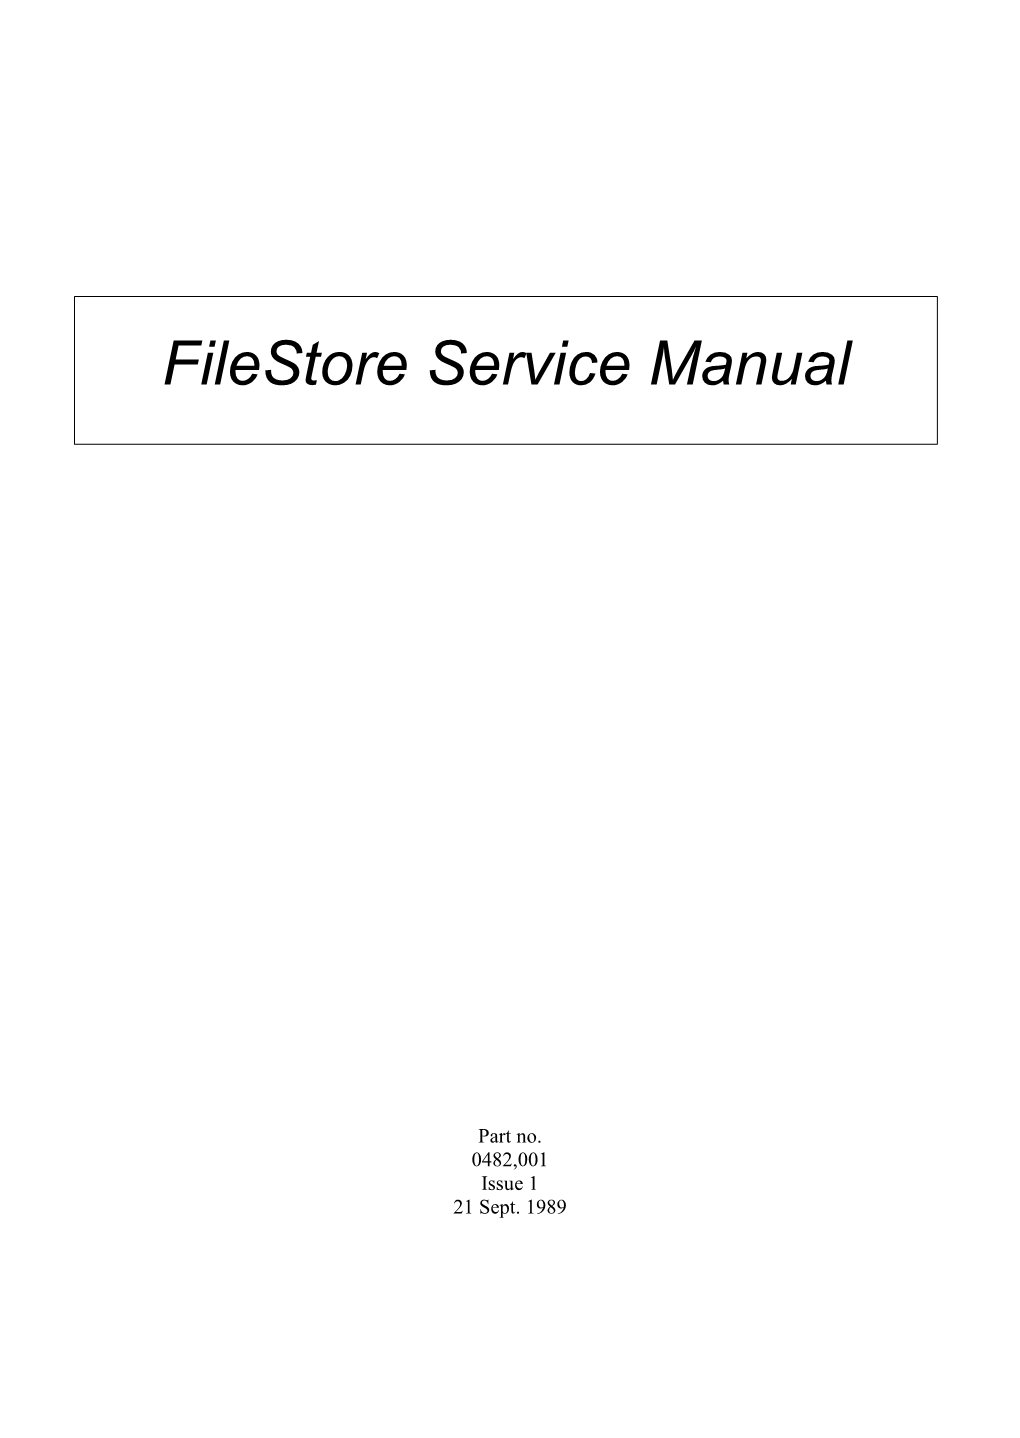 Filestore Service Manual